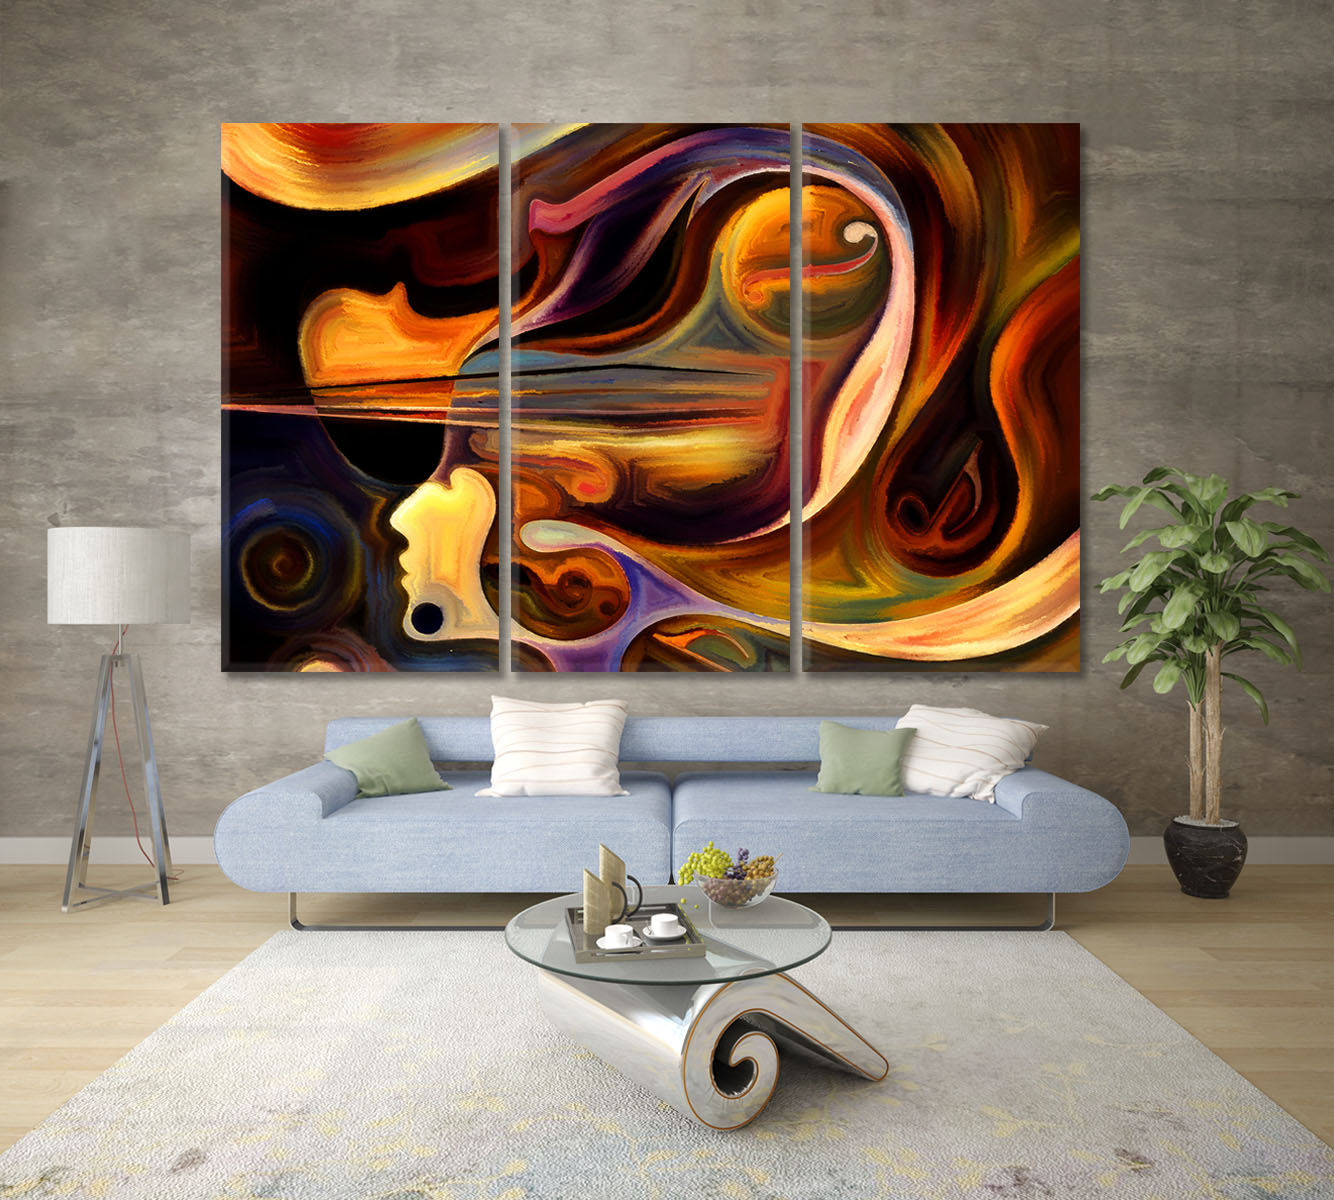 Music Spirituality Abstract Design Colorful Human and Musical Figures Music Wall Panels Artesty 3 panels 36" x 24" 